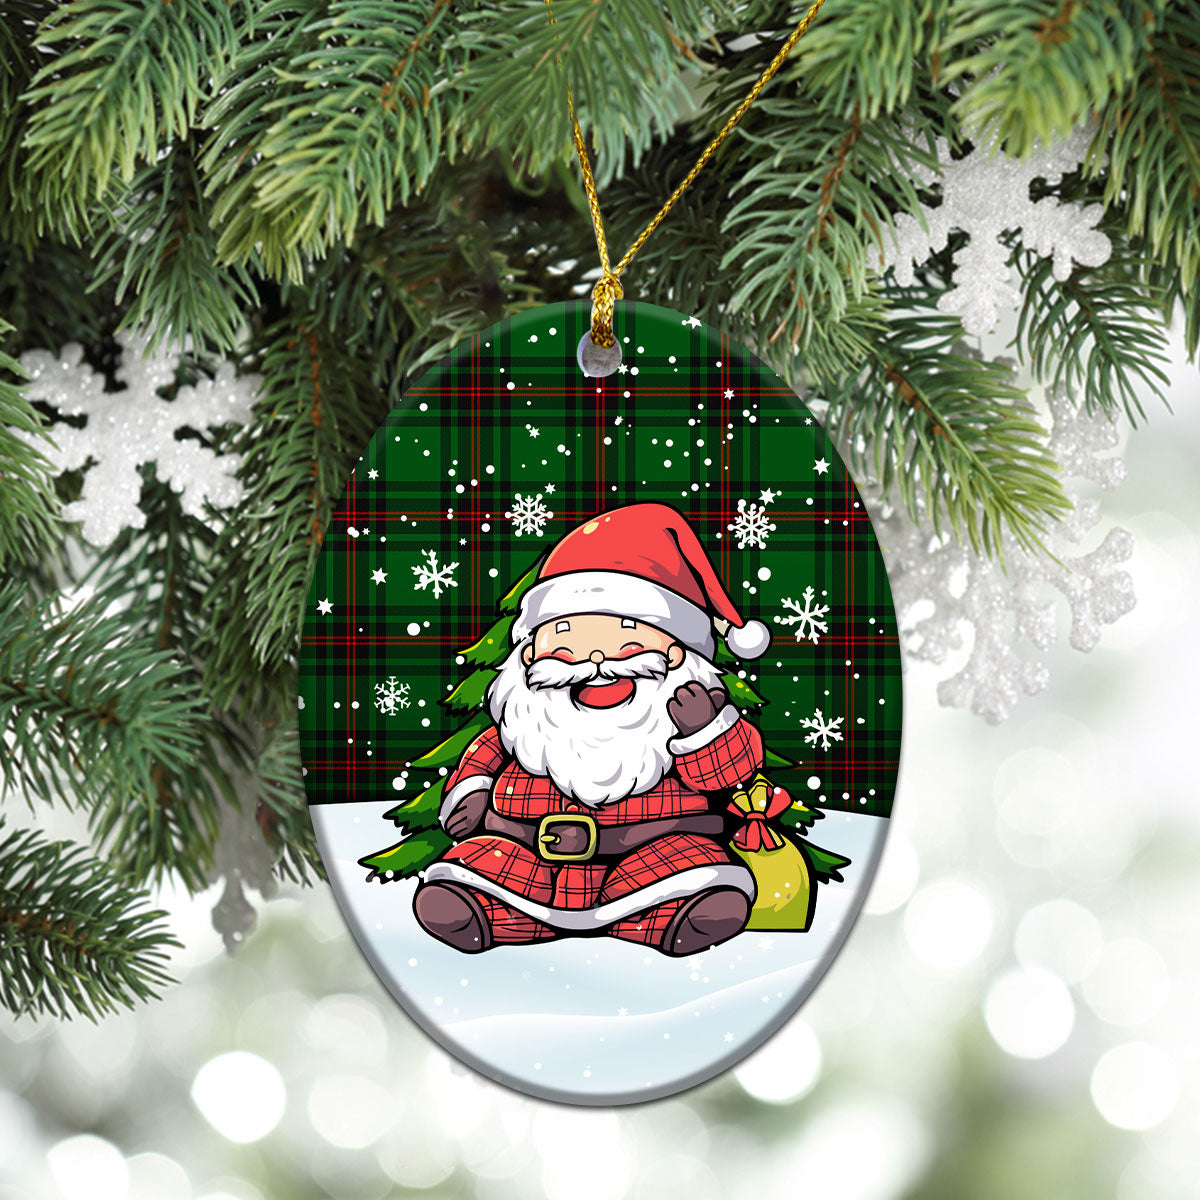 Beveridge Tartan Christmas Ceramic Ornament - Scottish Santa Style